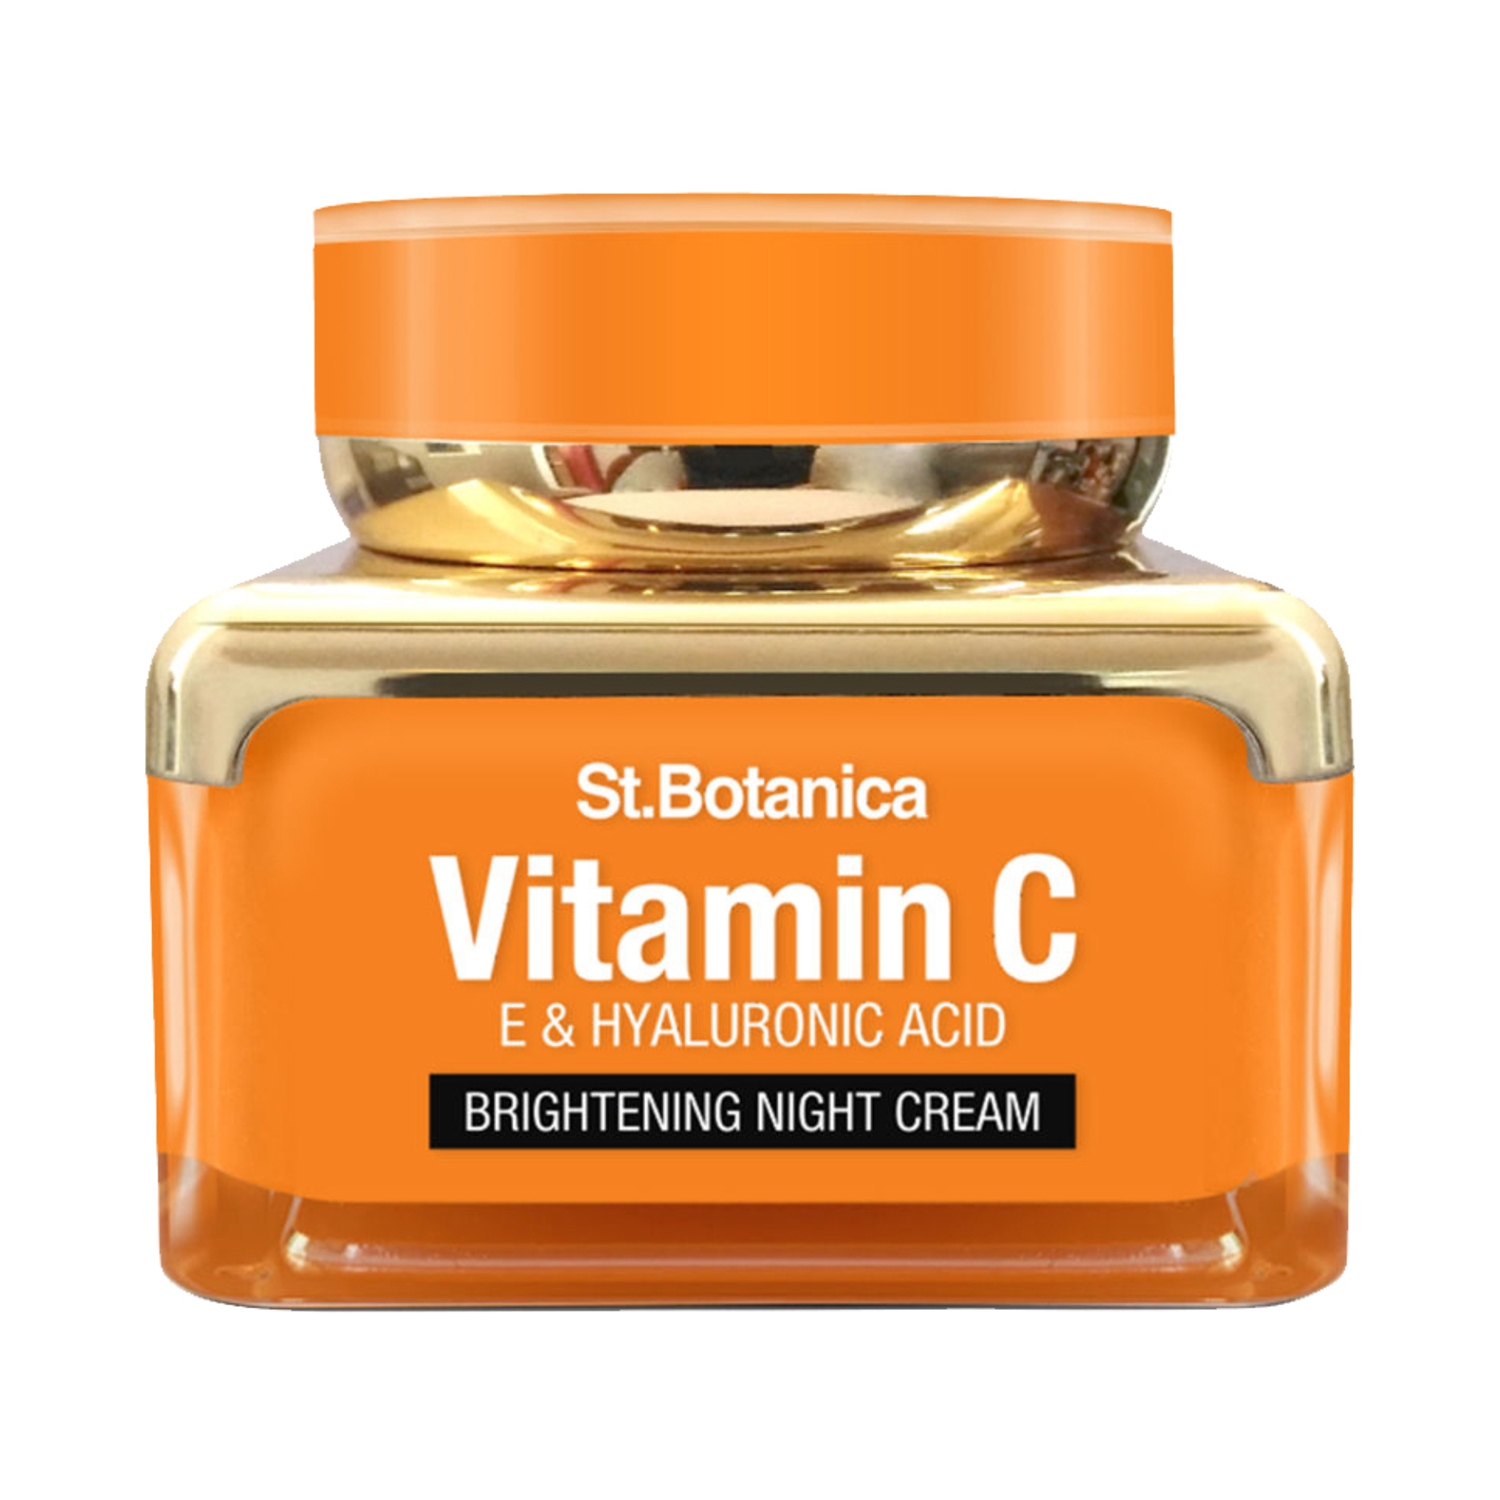 St.Botanica | St.Botanica Vitamin C, E & Hyaluronic Acid Brightening Night Cream (50g)